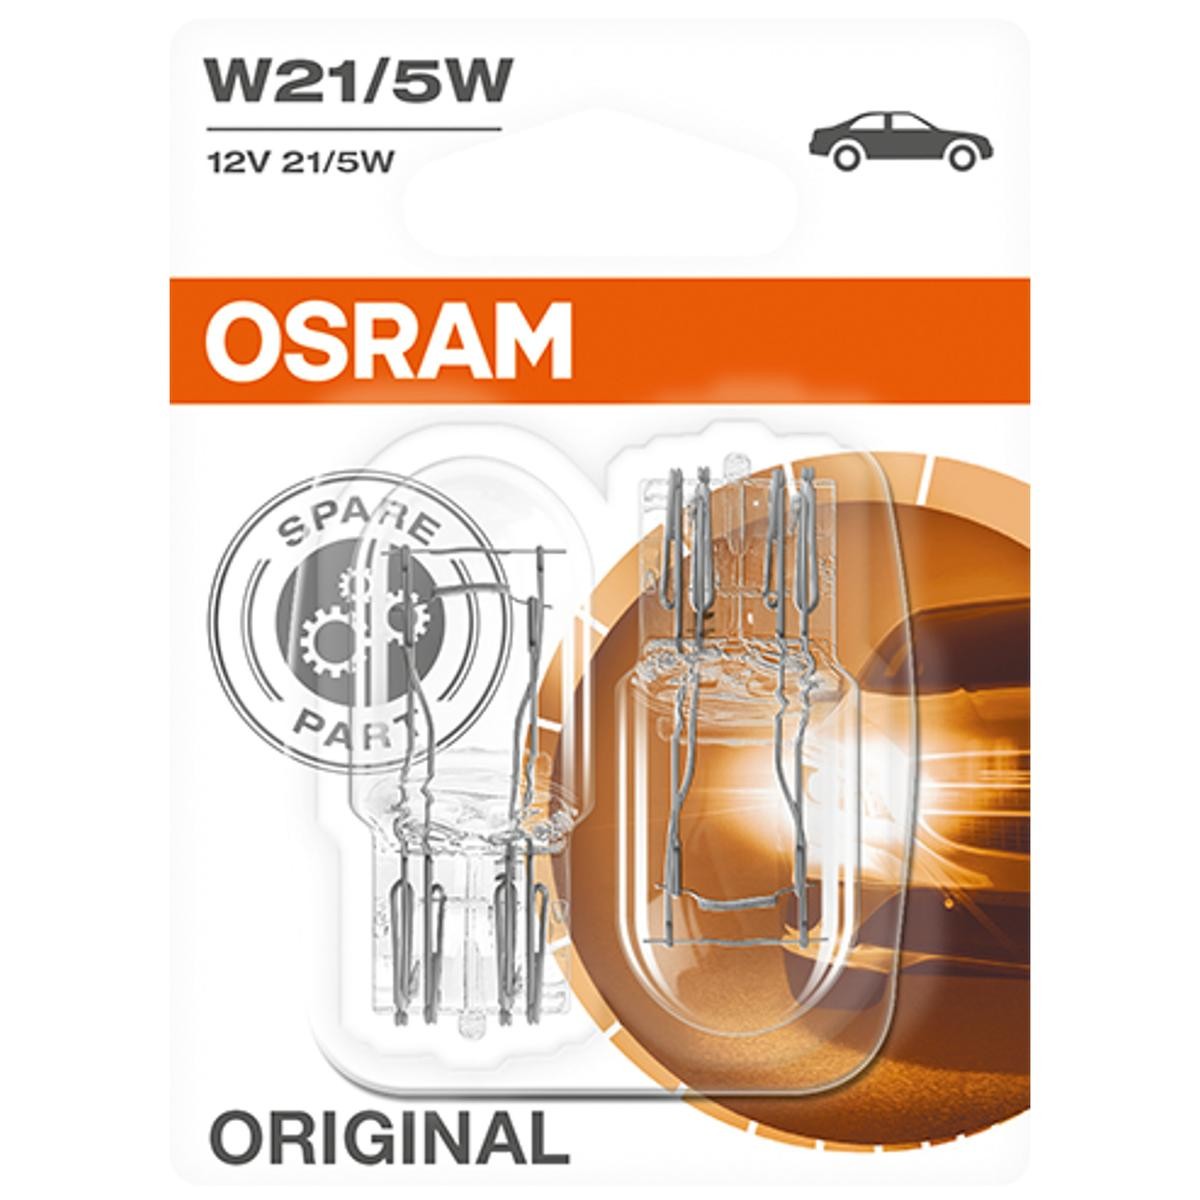 OSRAM 7515-02B Heckleuchten Glühlampe W21/5W, 12V 21/5W, ORIGINAL